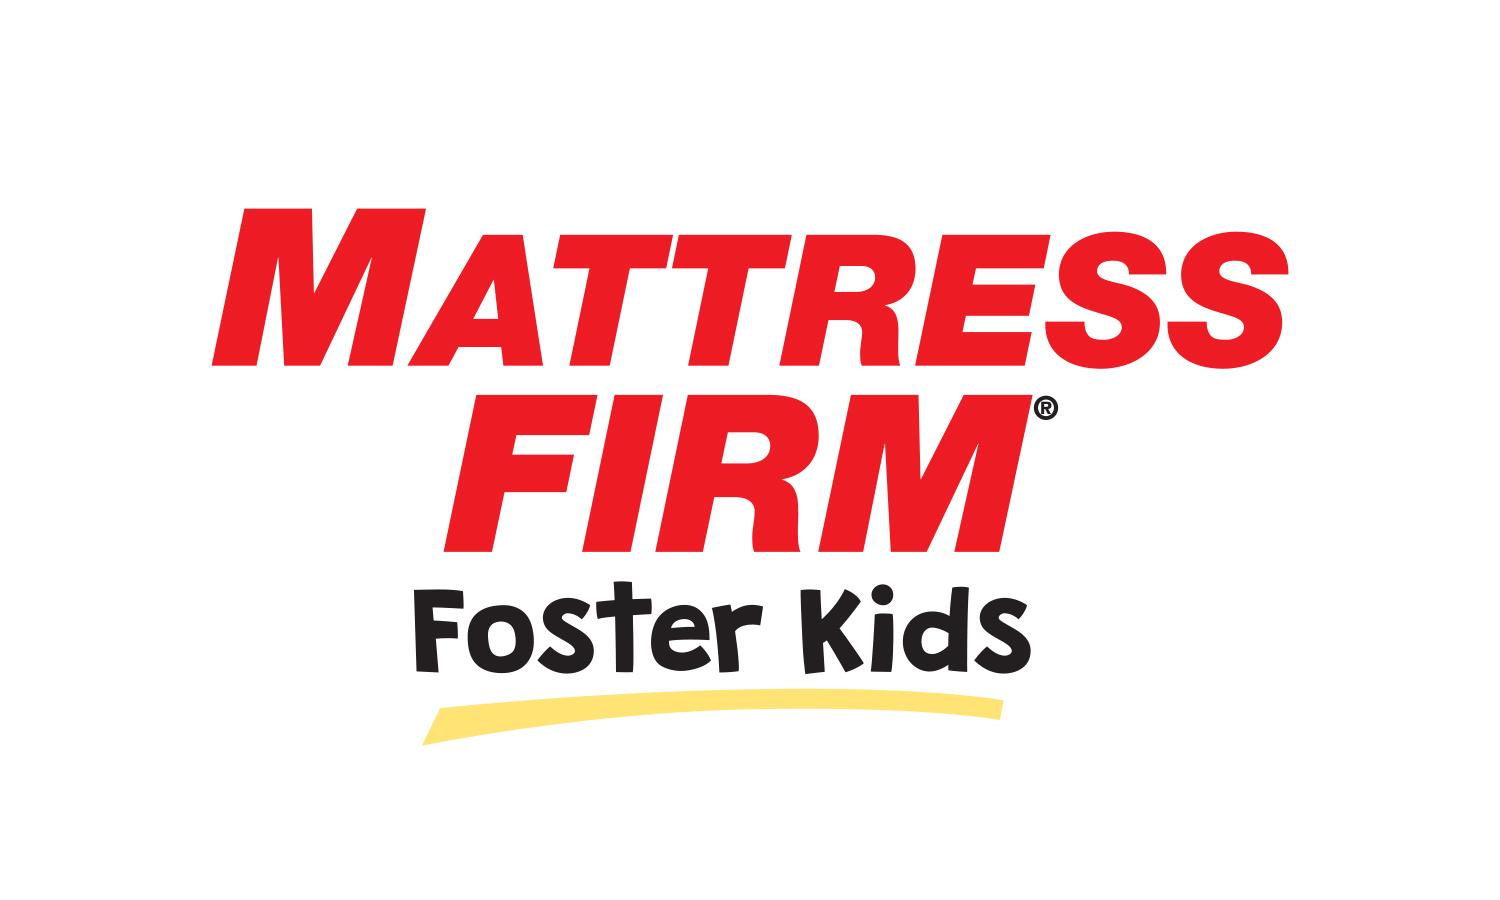 mattress firm foster child donation